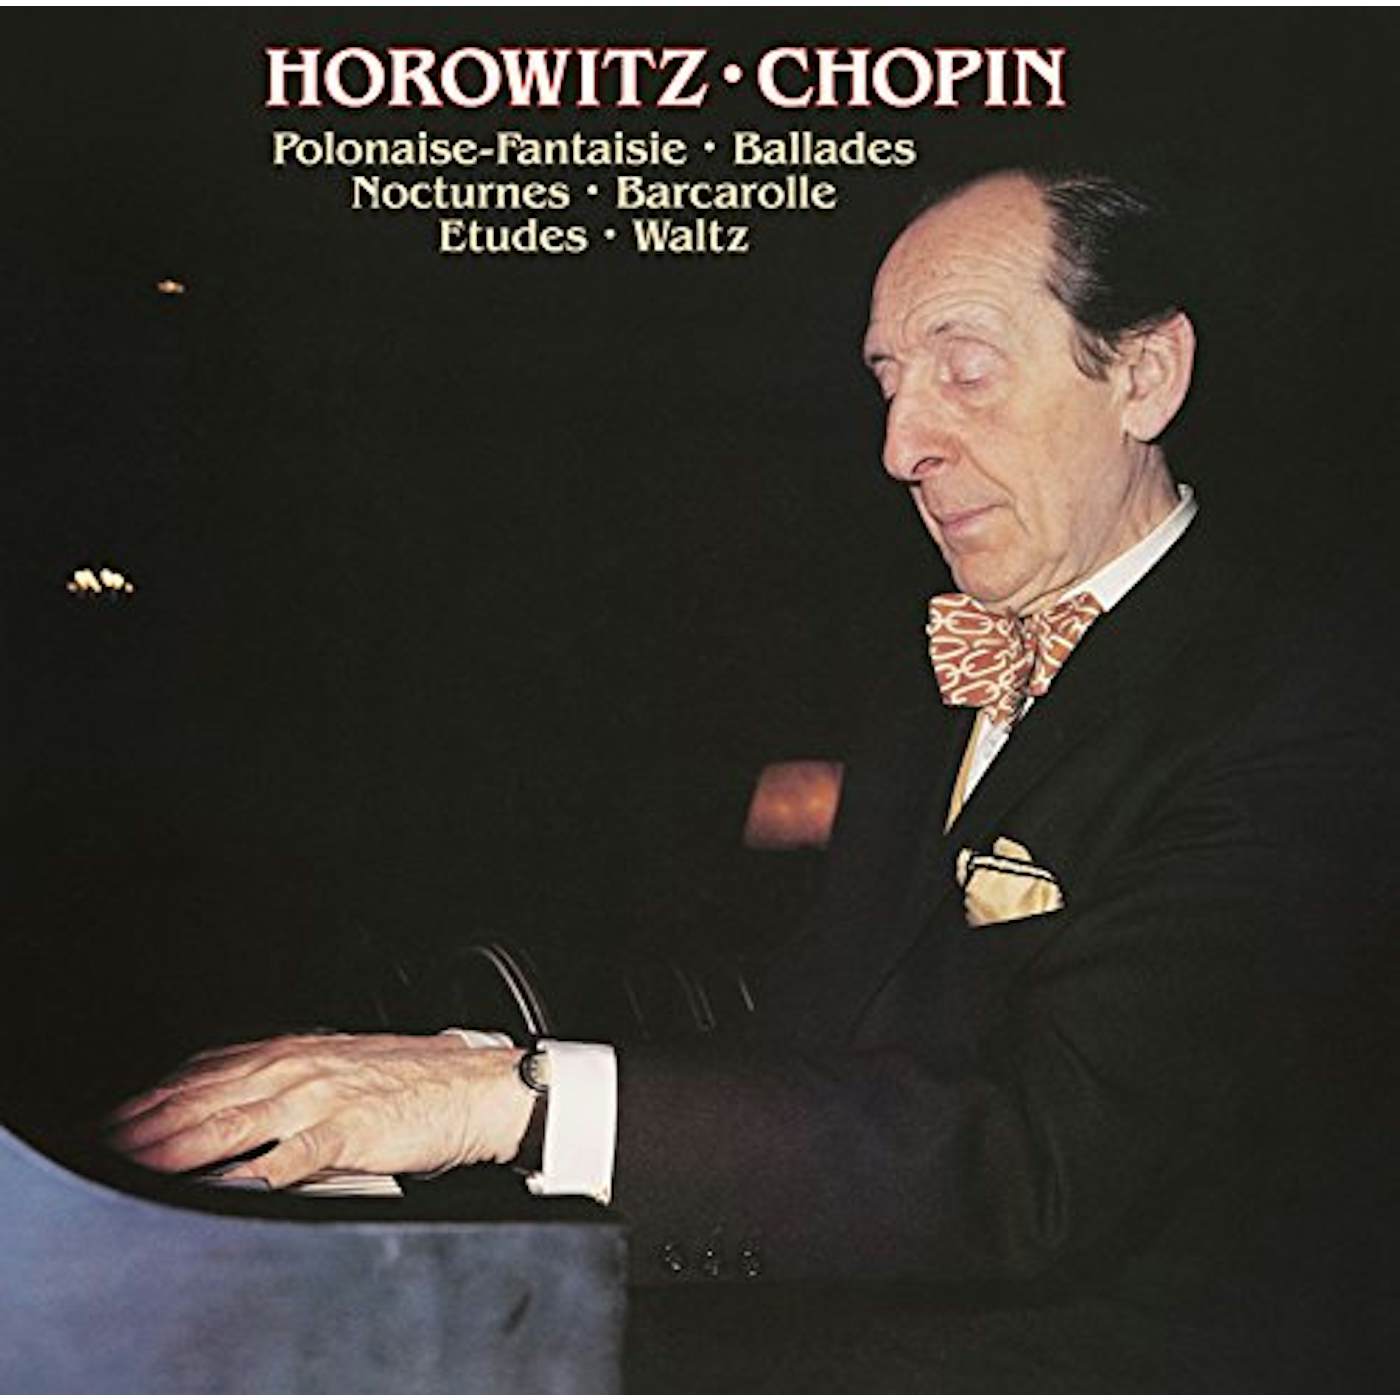 Horowitz, Vladimir CHOPIN: PIANO MUSIC (LIMITED) CD